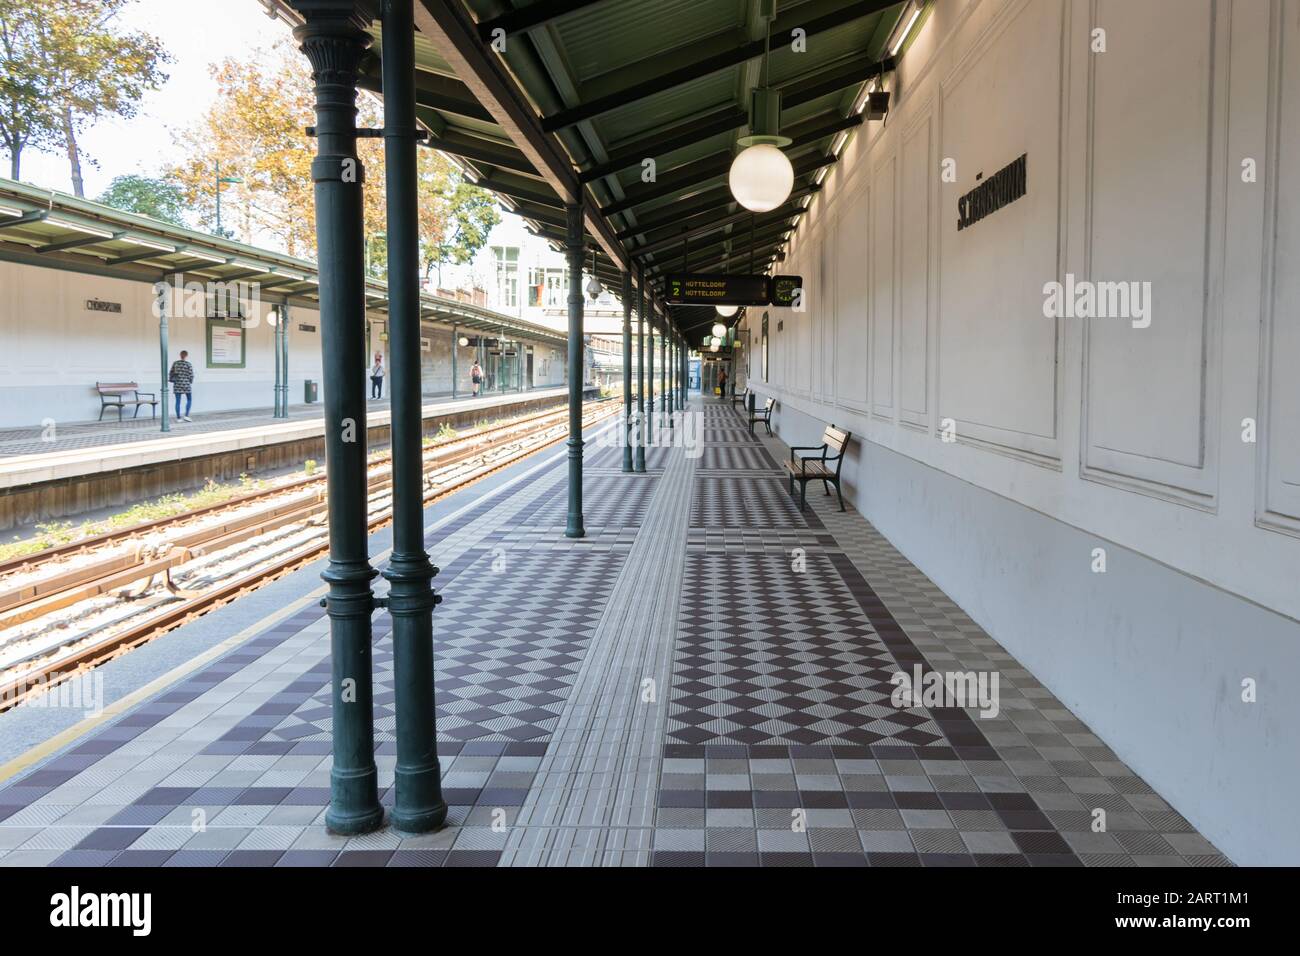 Vienna, Austria - September 3, 2019: People waiting at Schonbrunn tube platform for train arrives Stock Photo